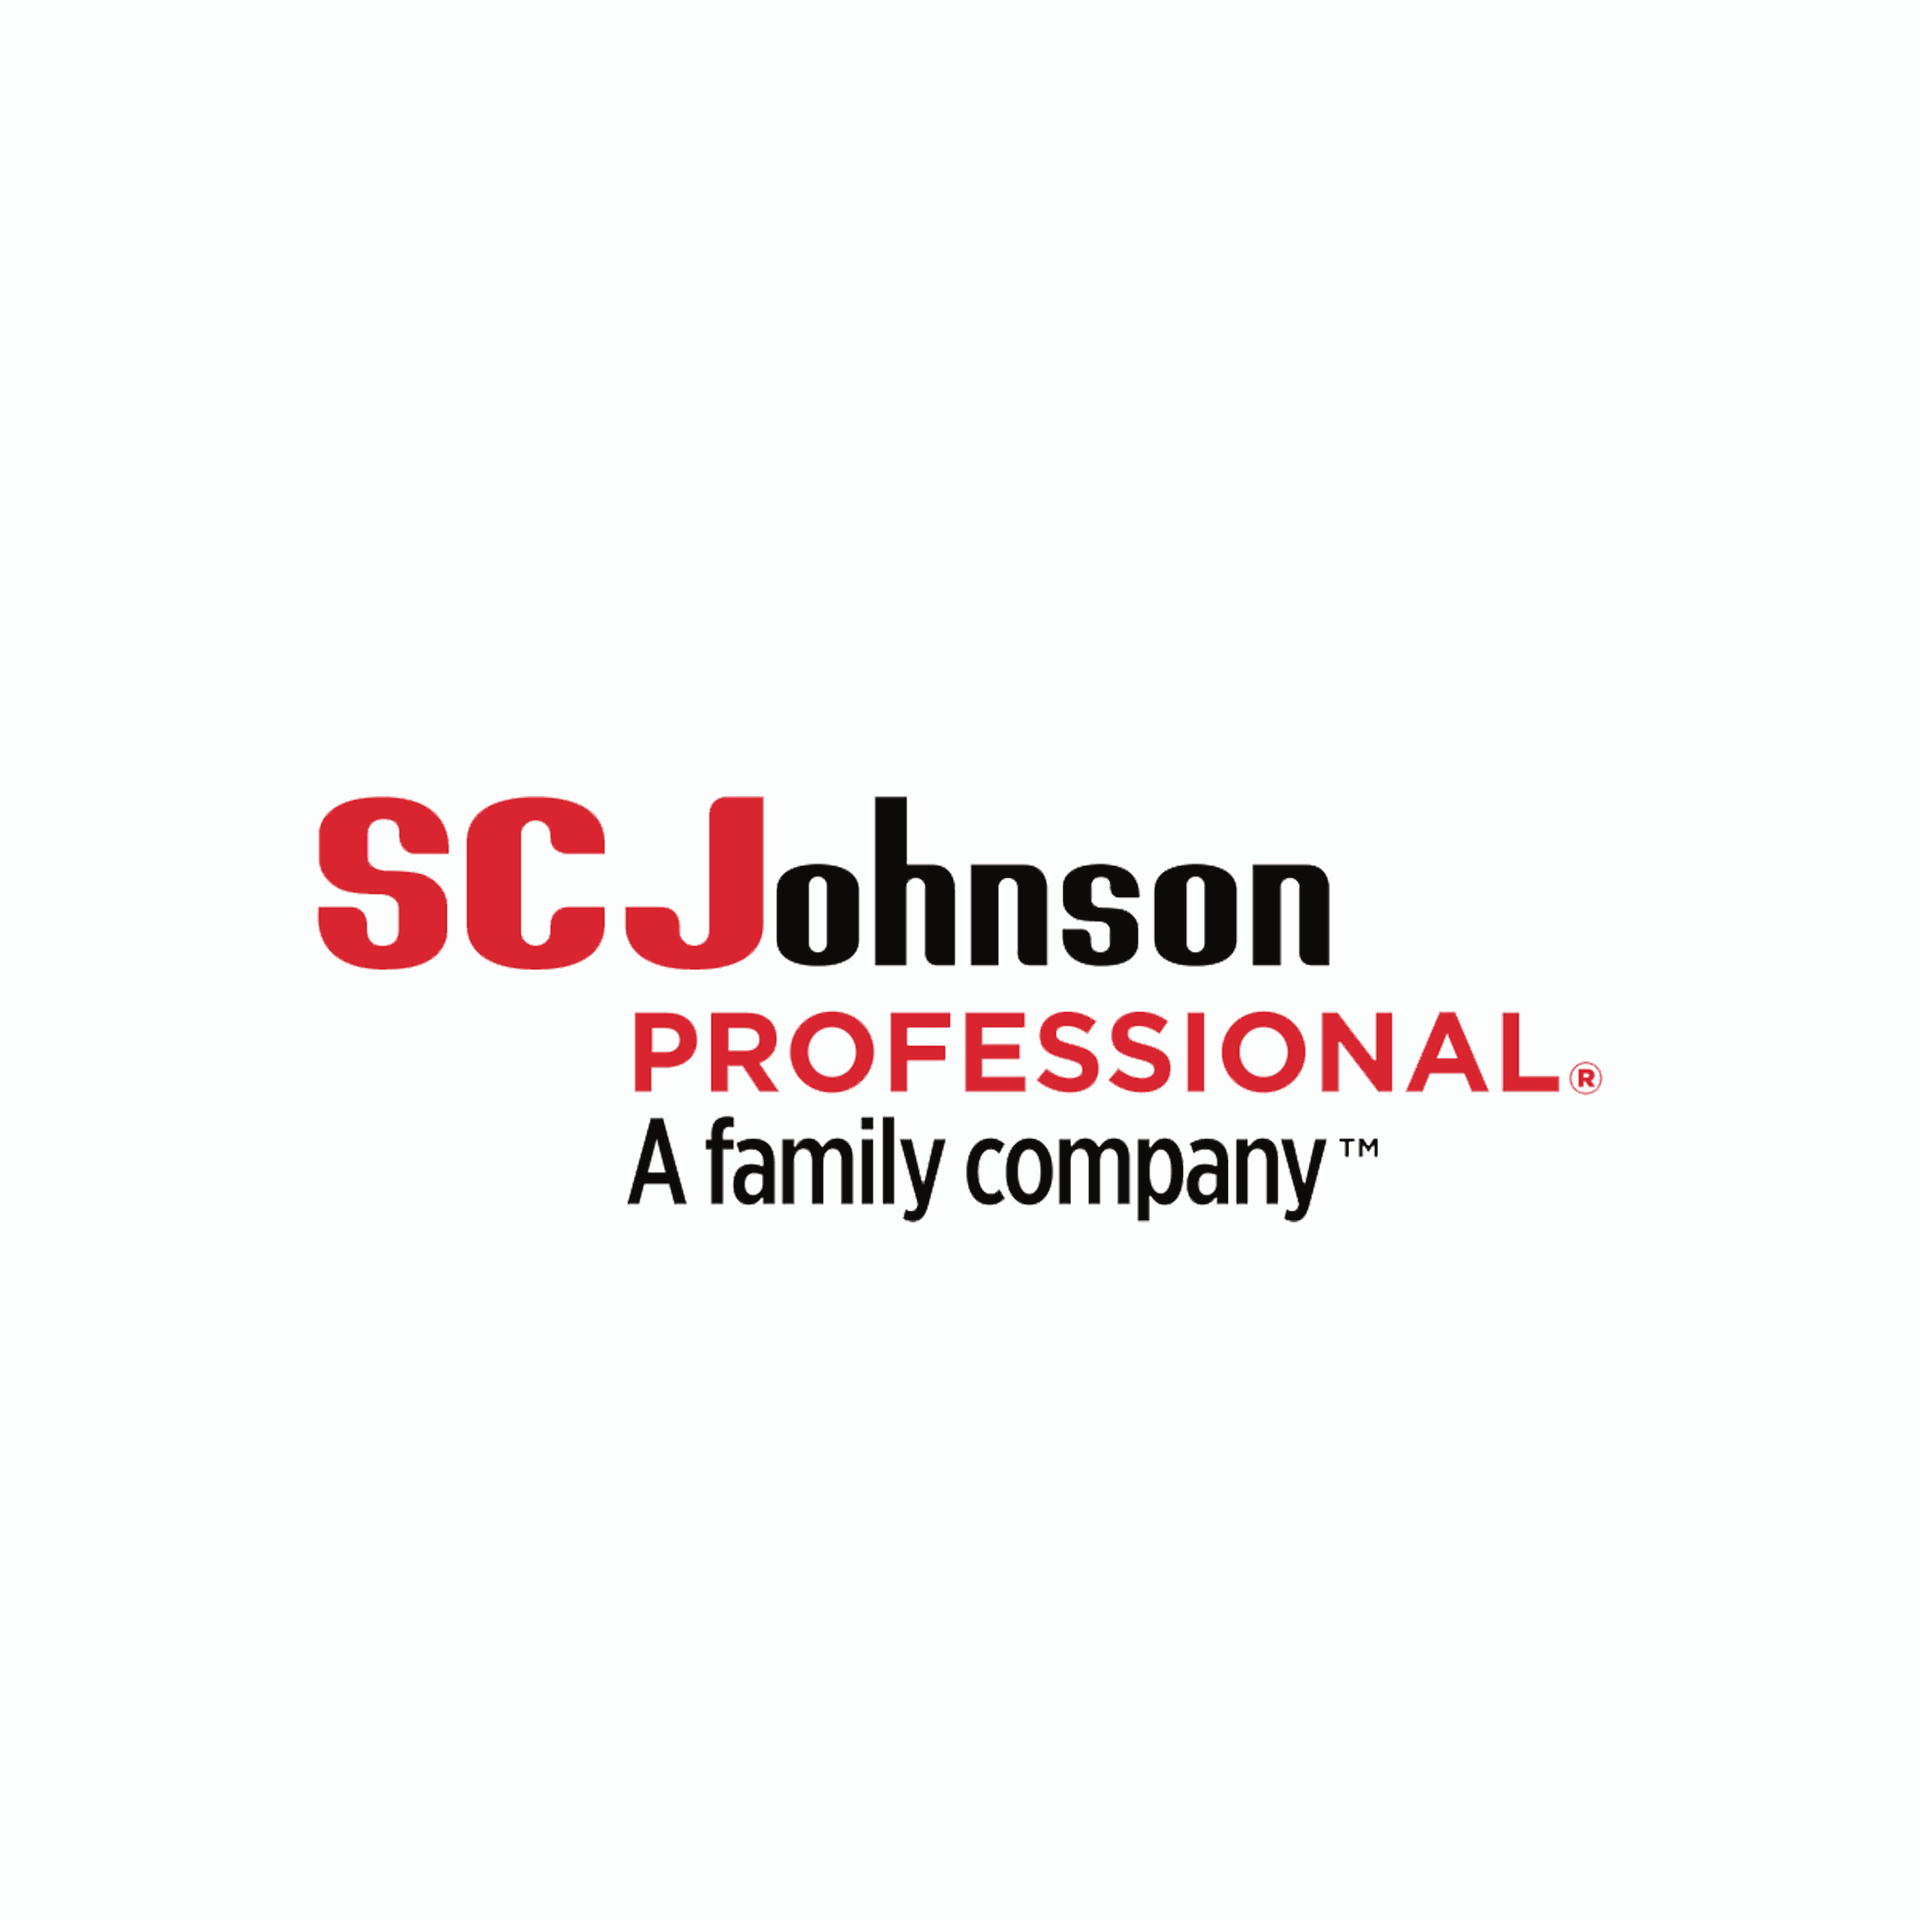 Brand: SC Johnson